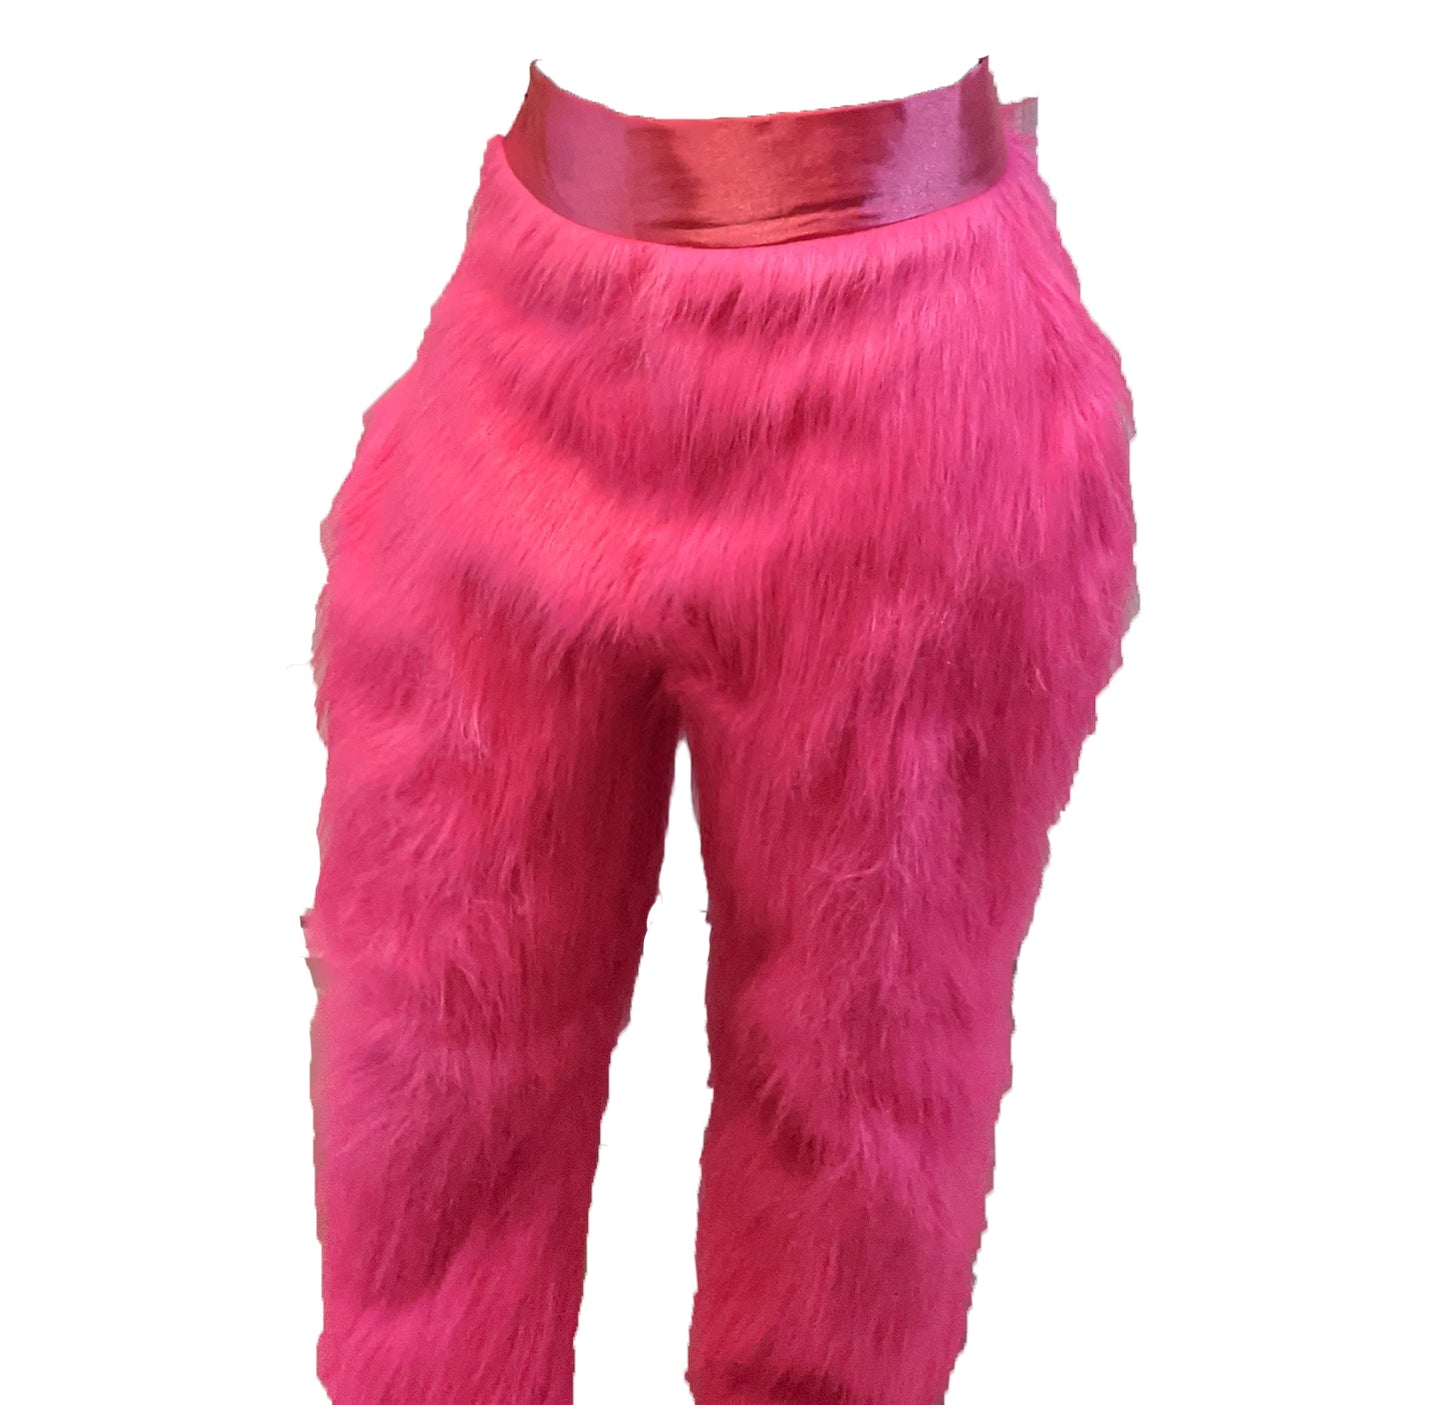 Abominable Fur Pants – The Kendi Brand